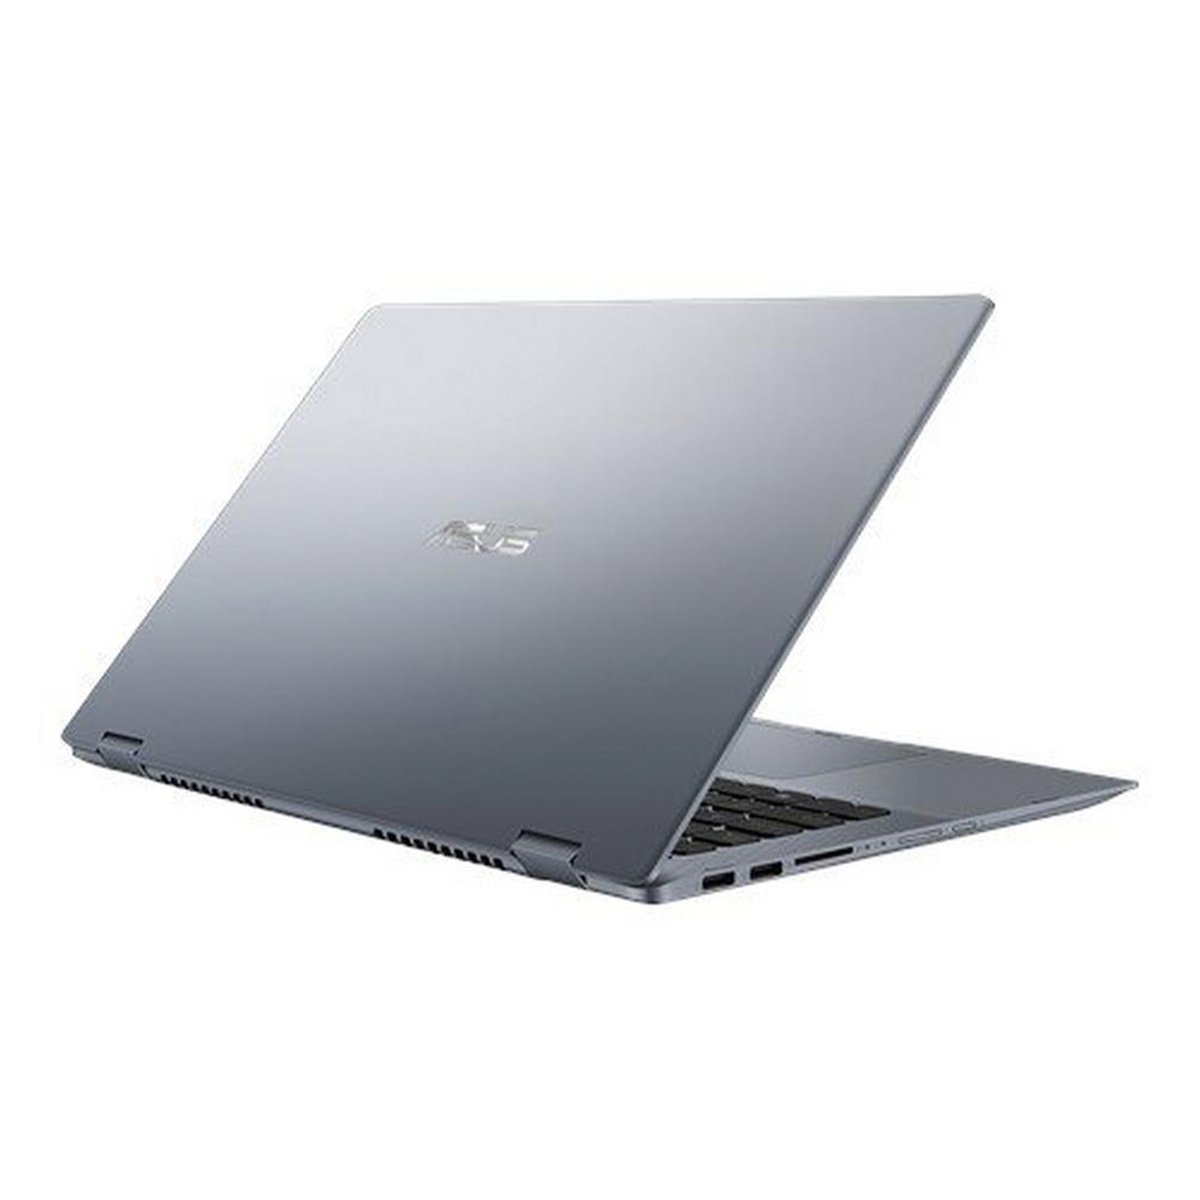 Asus VivoBook Flip TP412FA-EC598T ,Intel Core i3,4GB RAM,128GB SSD,Intel Integrated Graphics,14.0" FHD LED Touch,Windows 10, Silver Blue